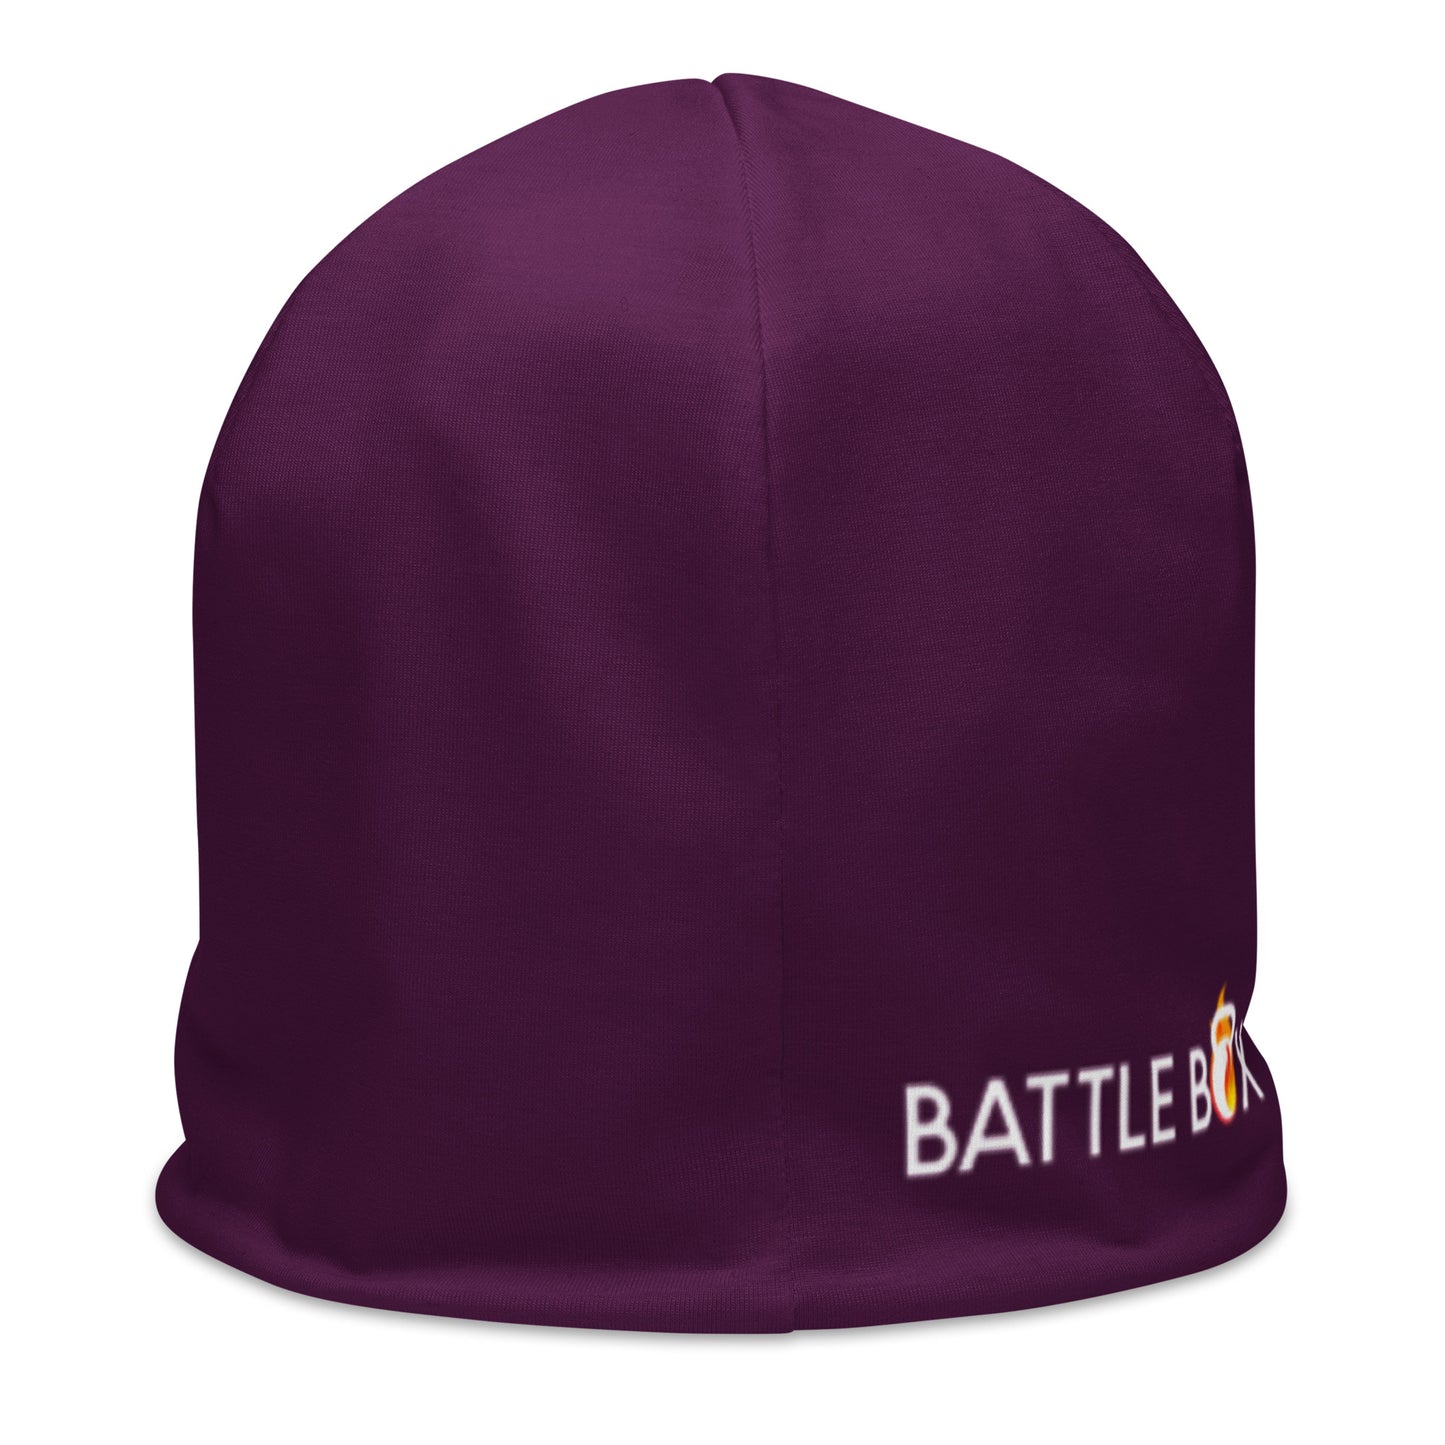 Battle Box Purple Unisex Beanie